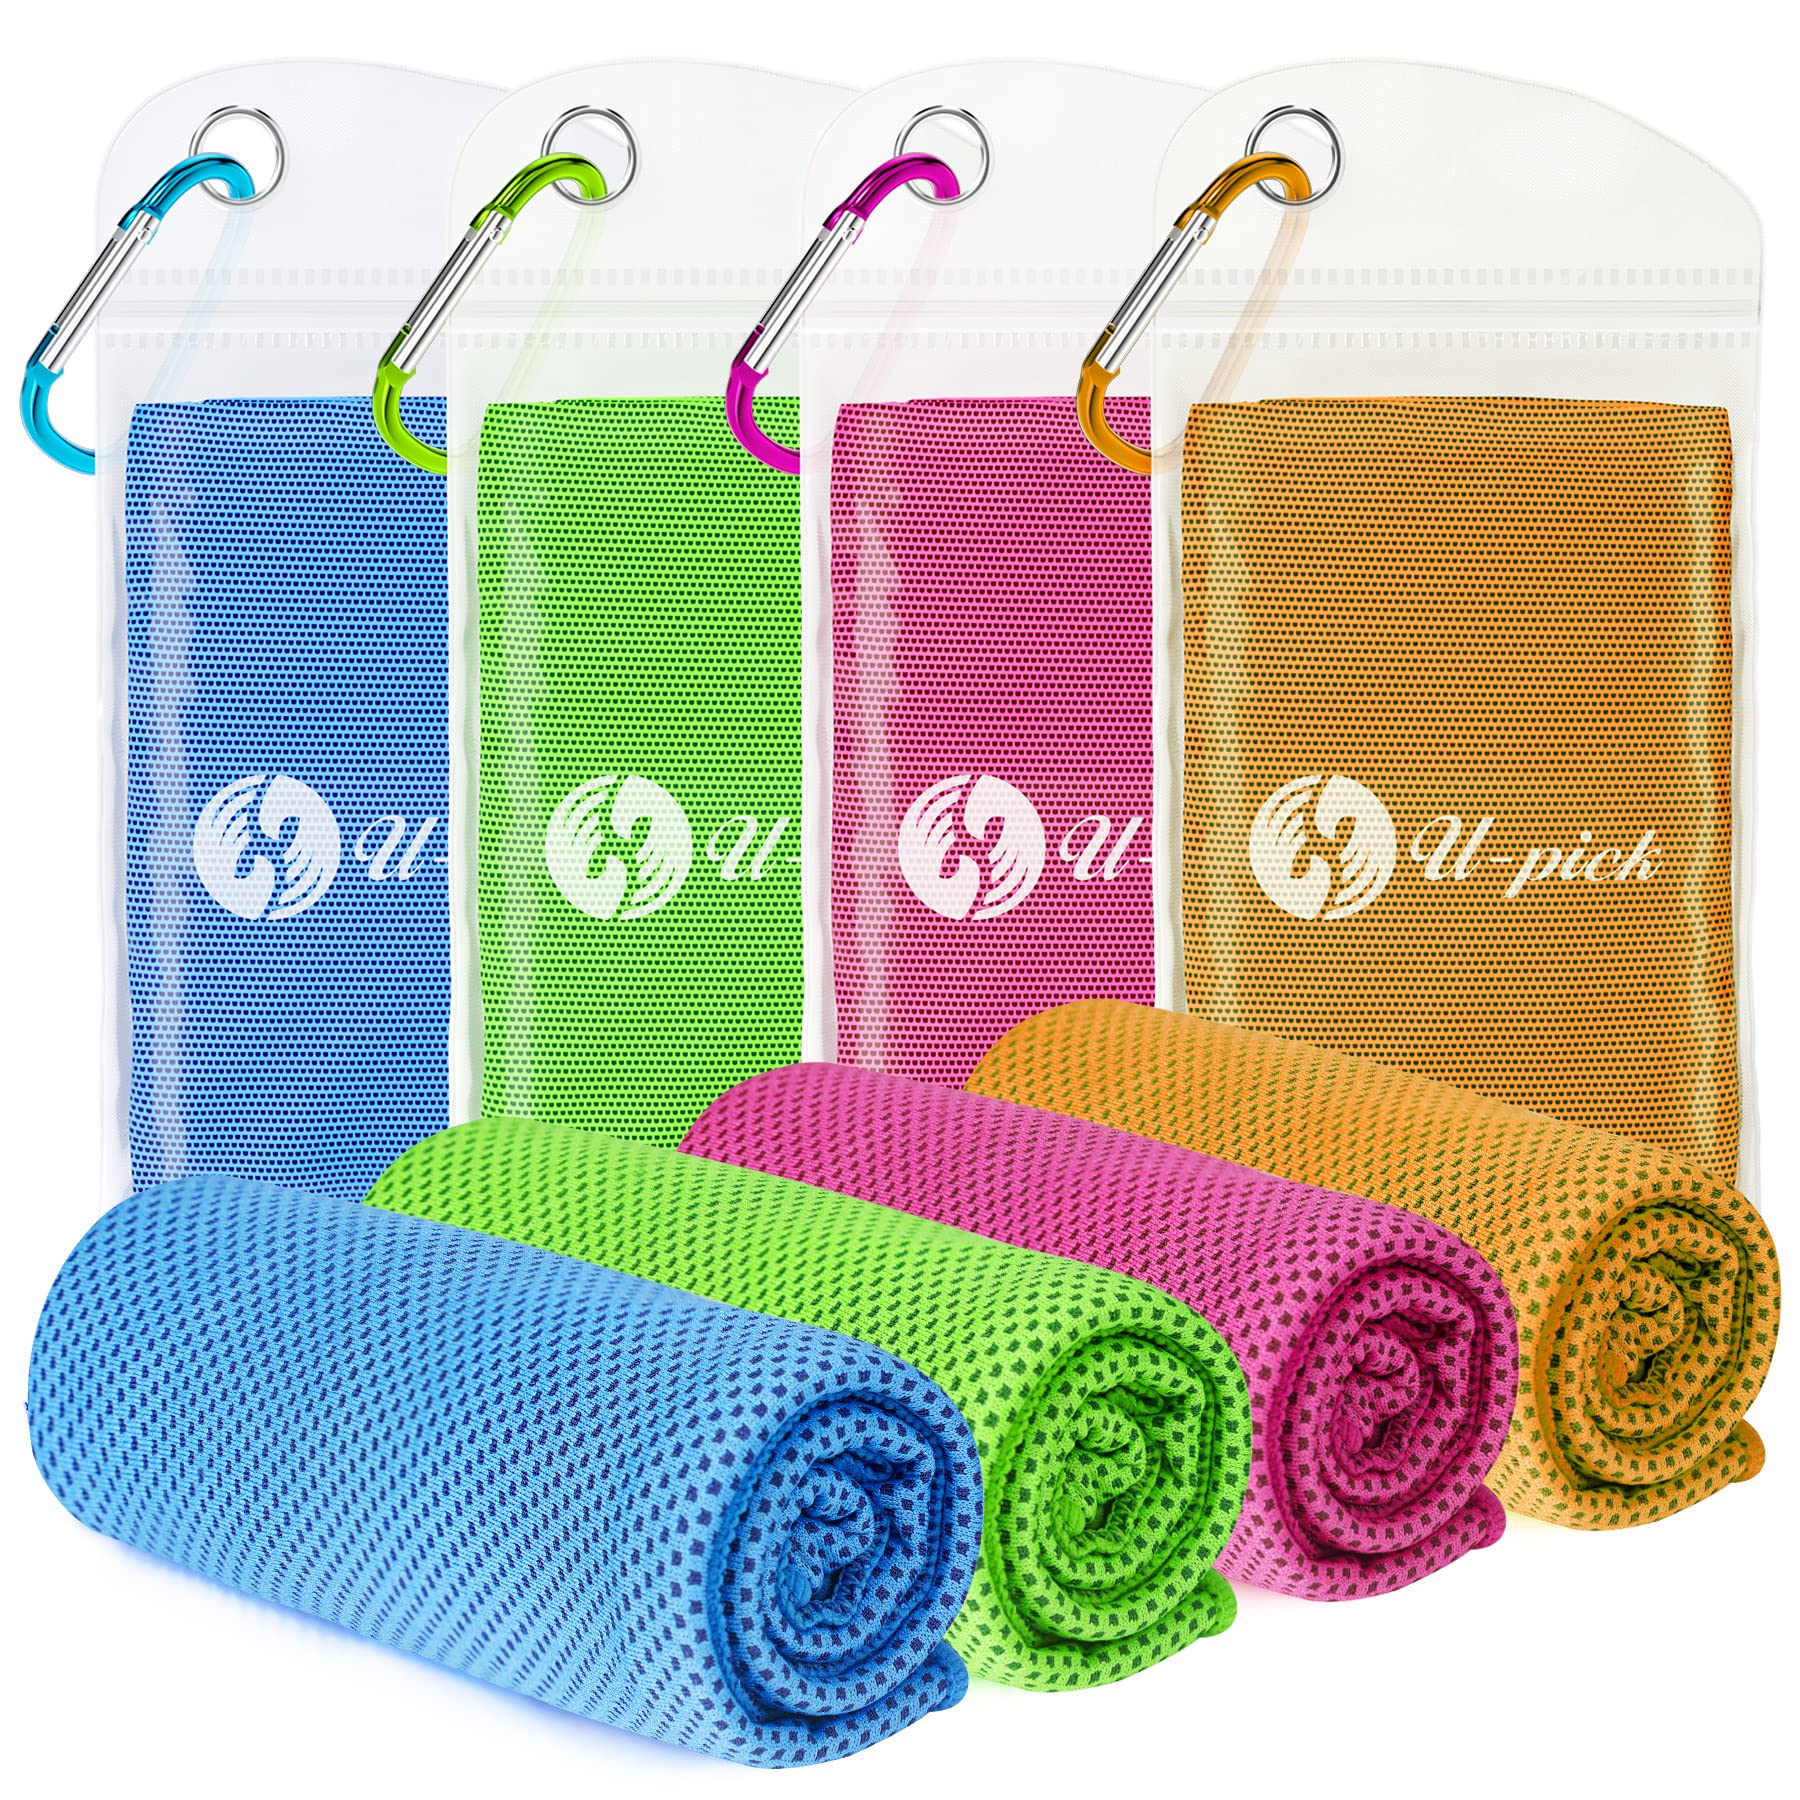 U-pick 4 Packs Cooling Towels (40x 12), Microfiber Ice Towel